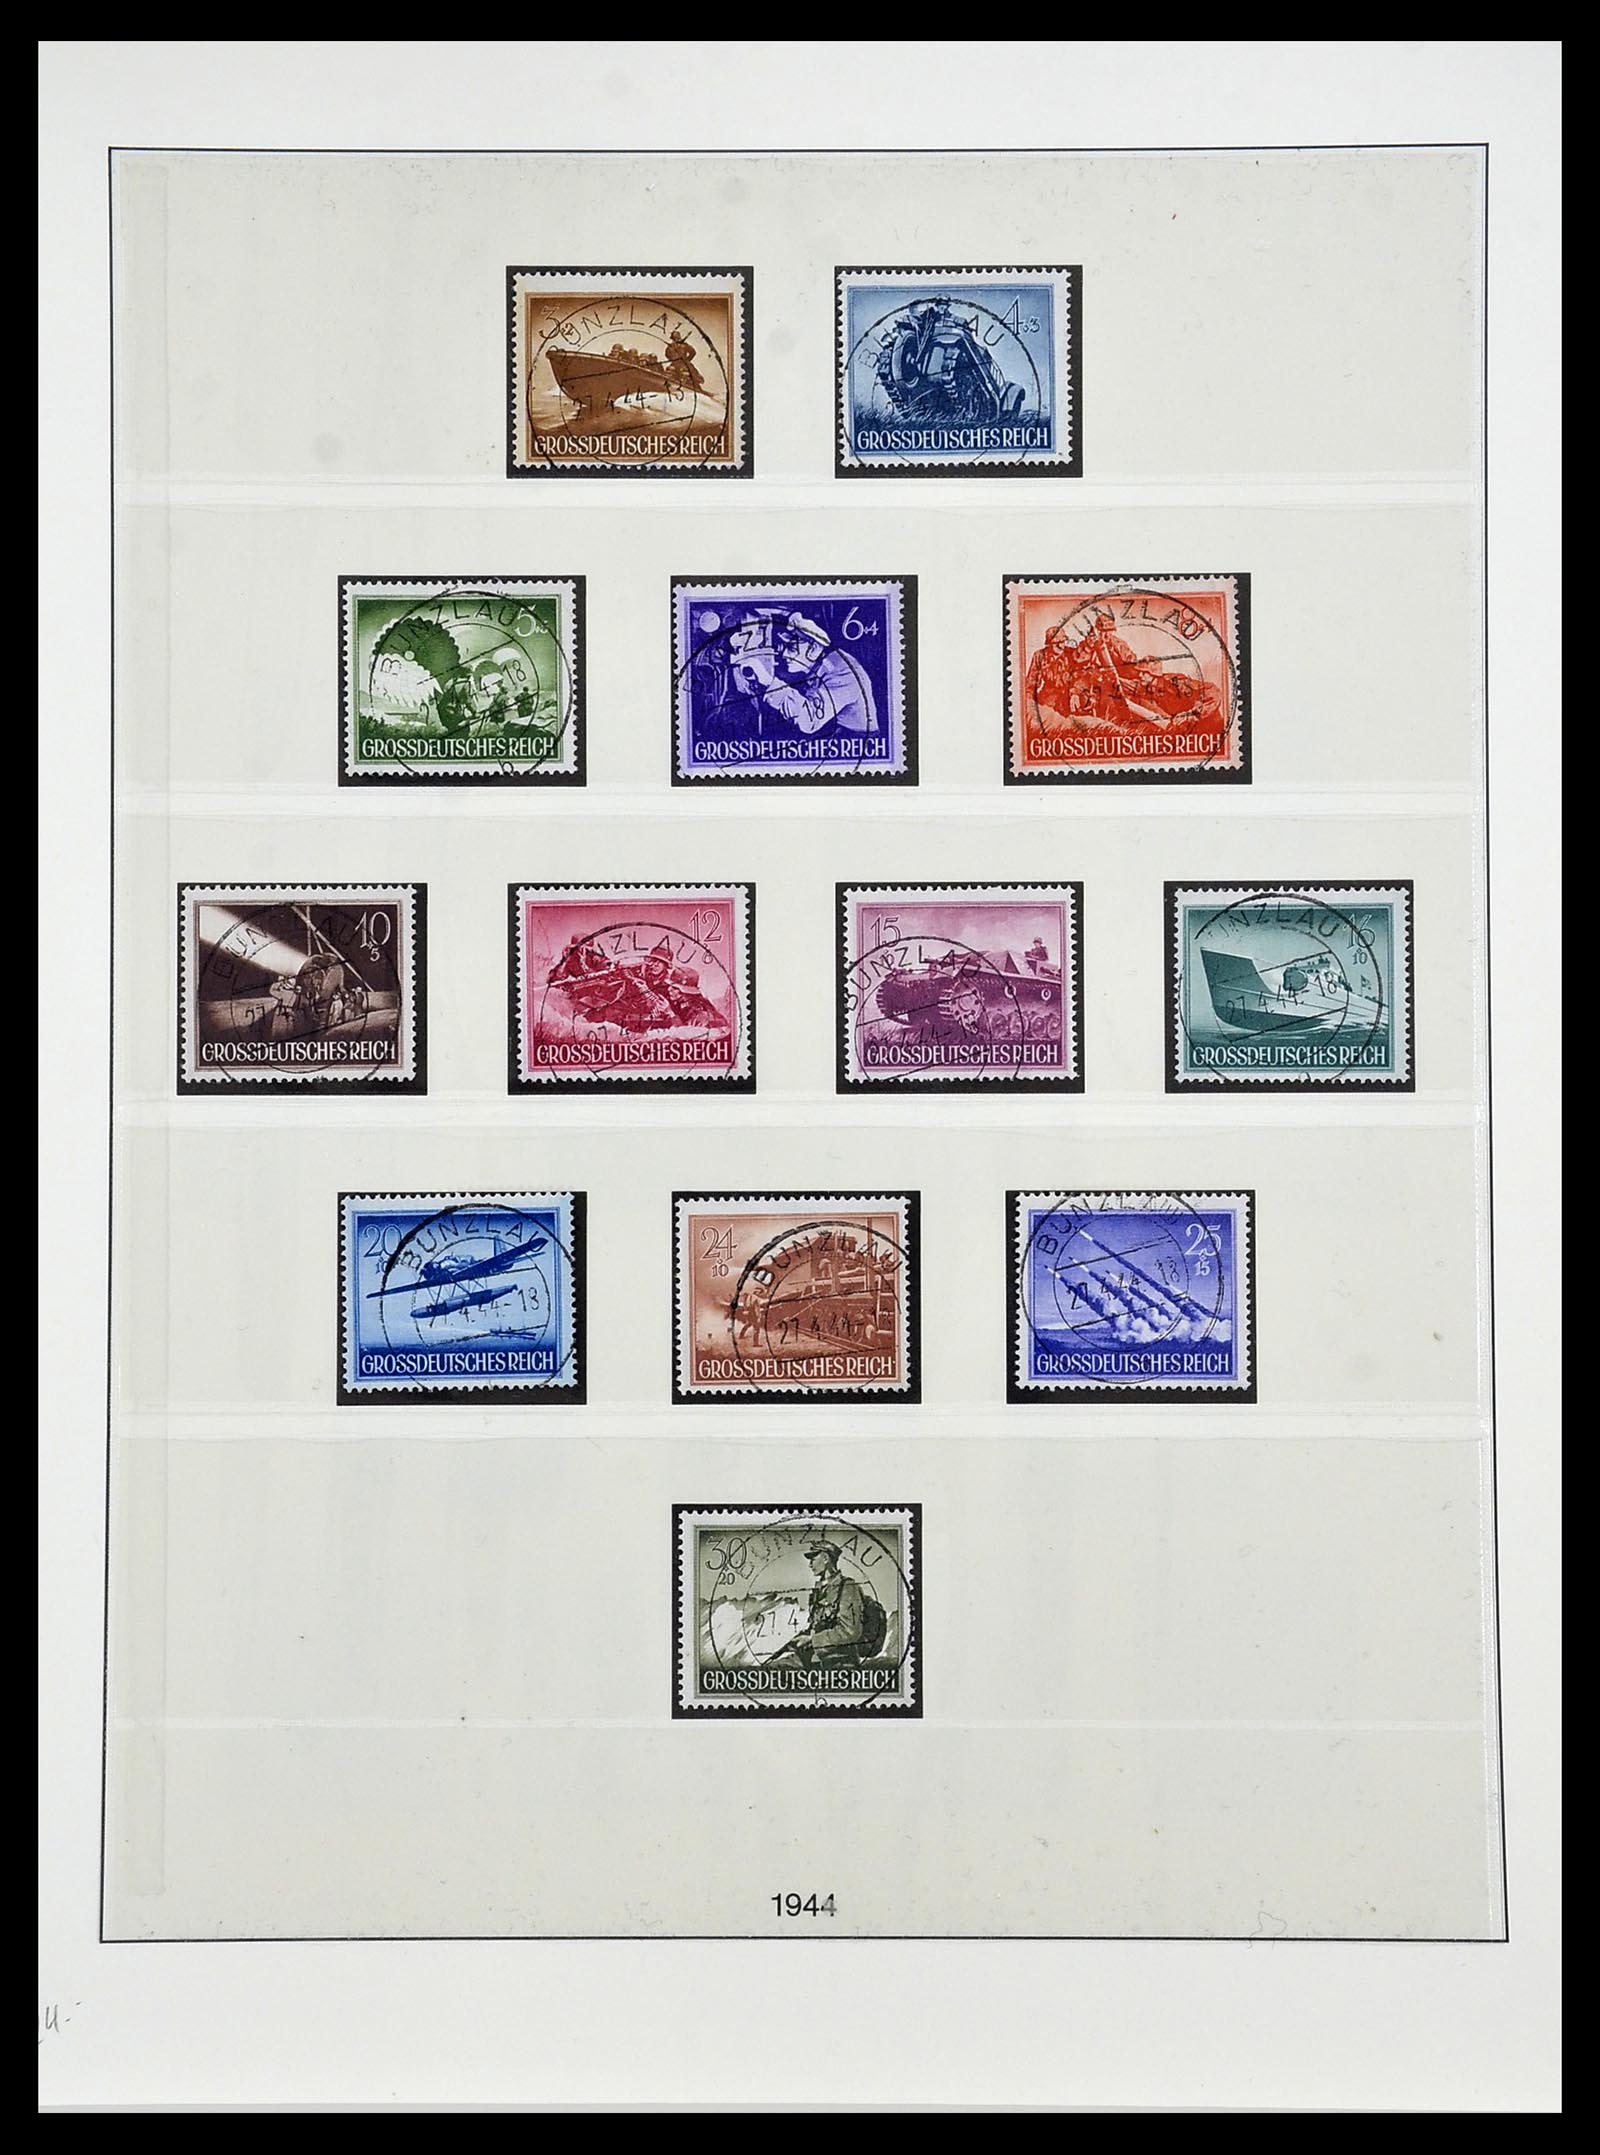 34201 033 - Stamp collection 34201 German Reich 1933-1945.